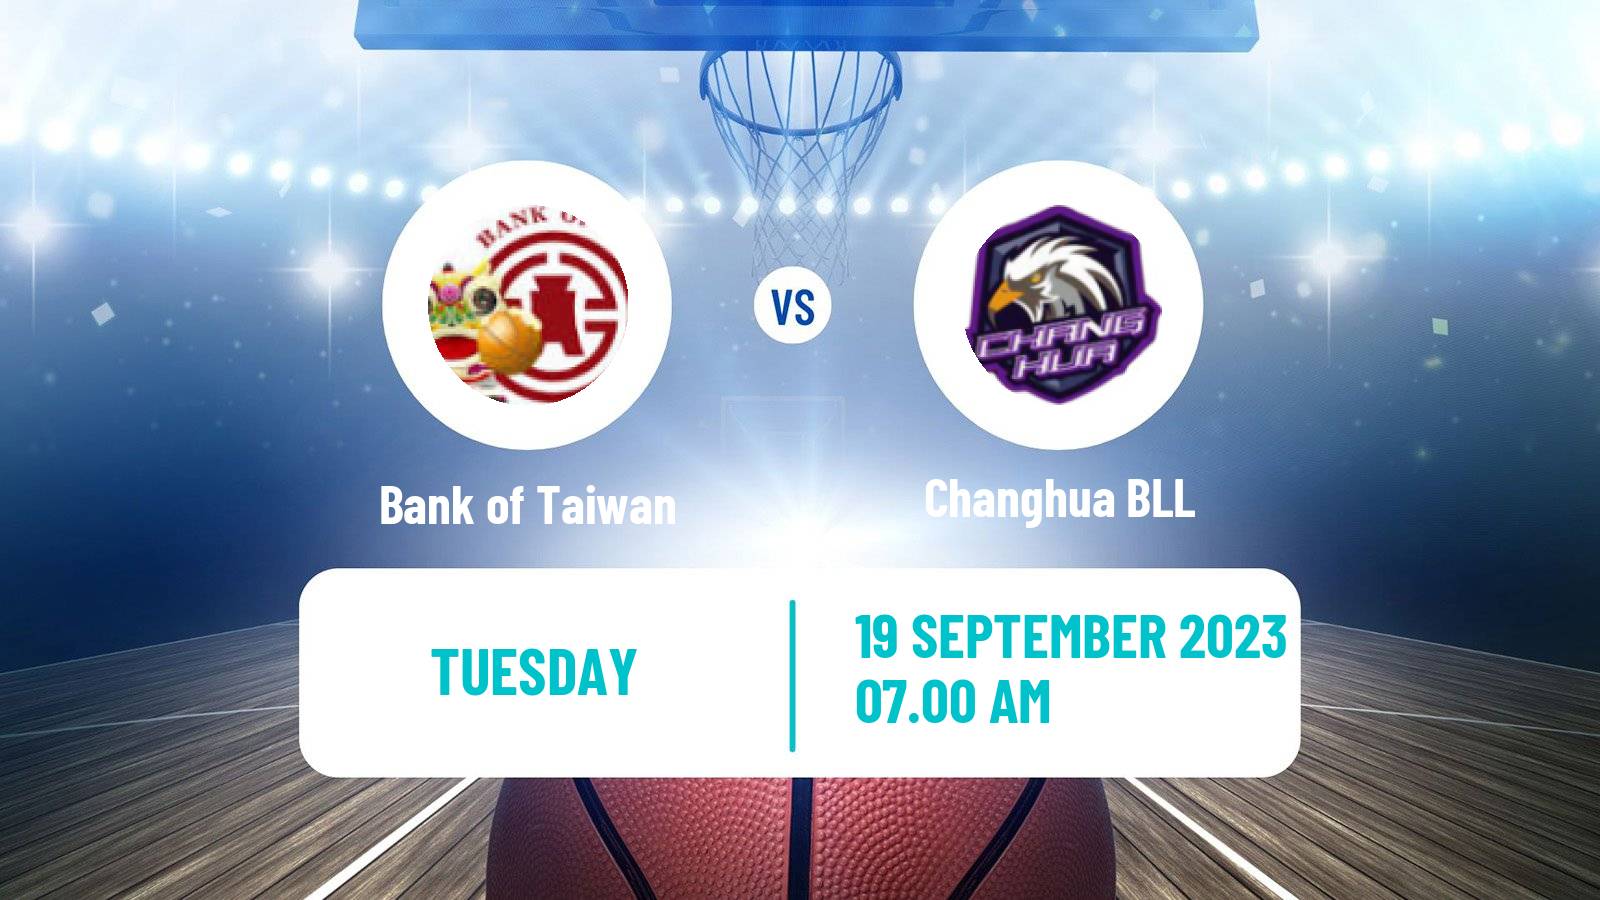 Basketball Club Friendly Basketball Bank of Taiwan - Changhua BLL